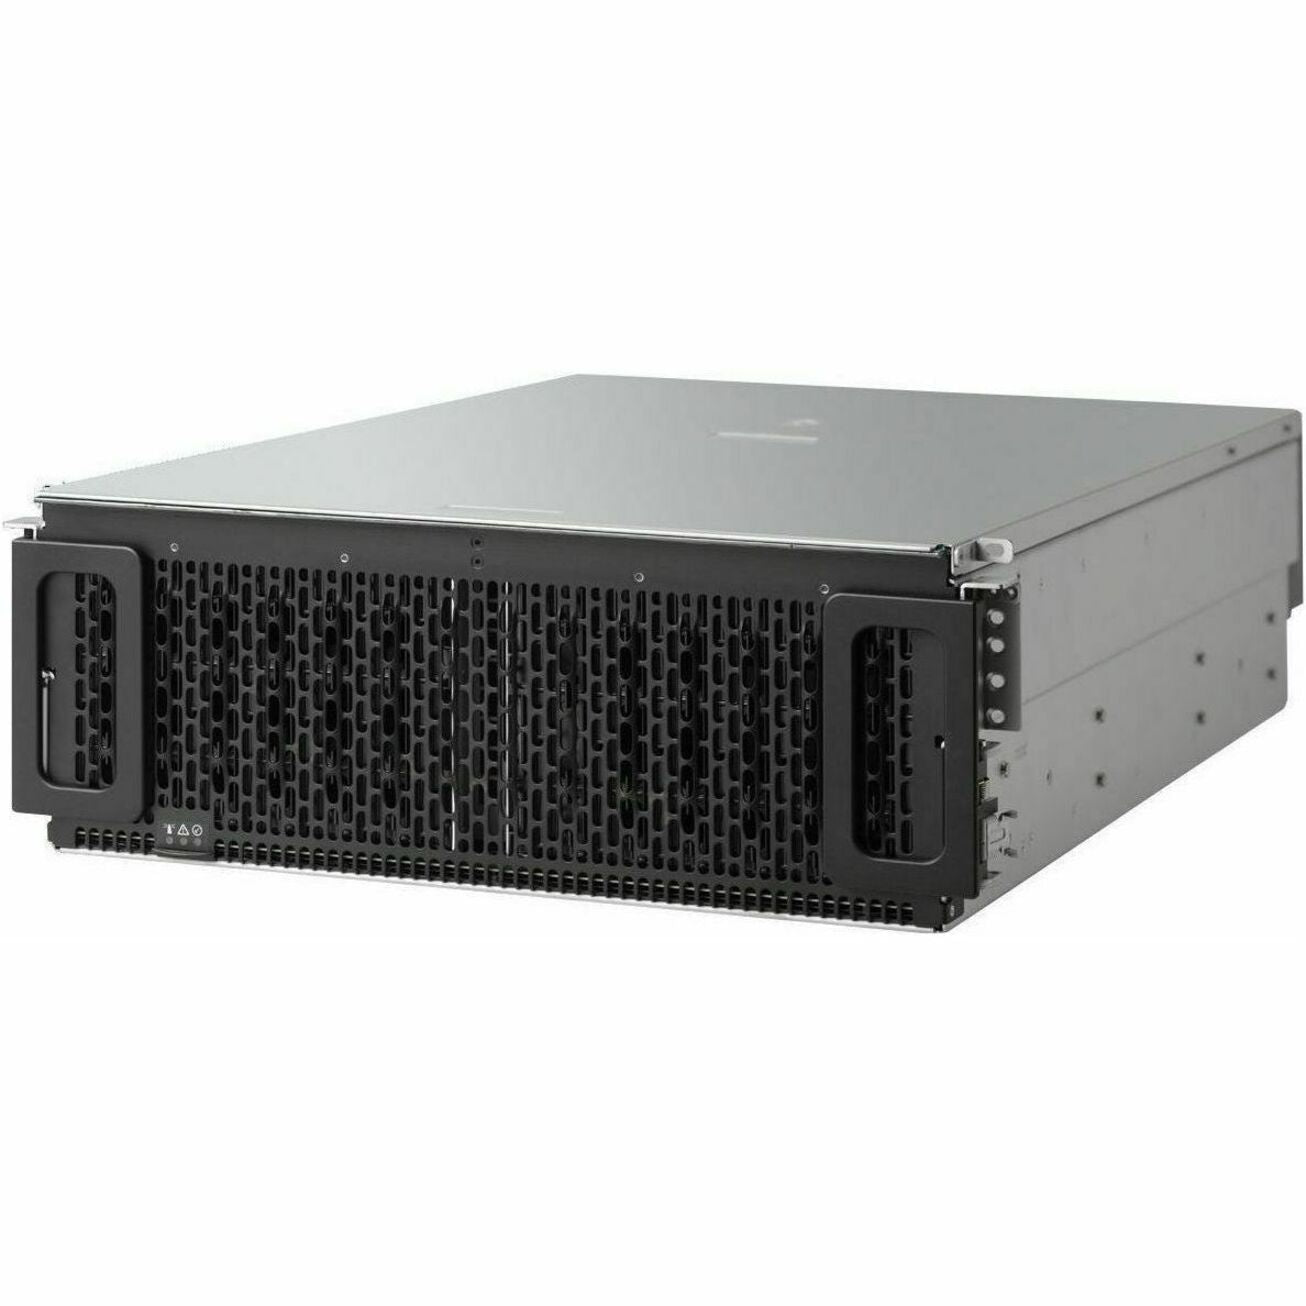 HGST 1ES2097 Ultrastar Data60 SE4U60-60 Drive Enclosure, 12Gb/s SAS, 60 Bays, 1080TB Capacity, 4U Rack-mountable